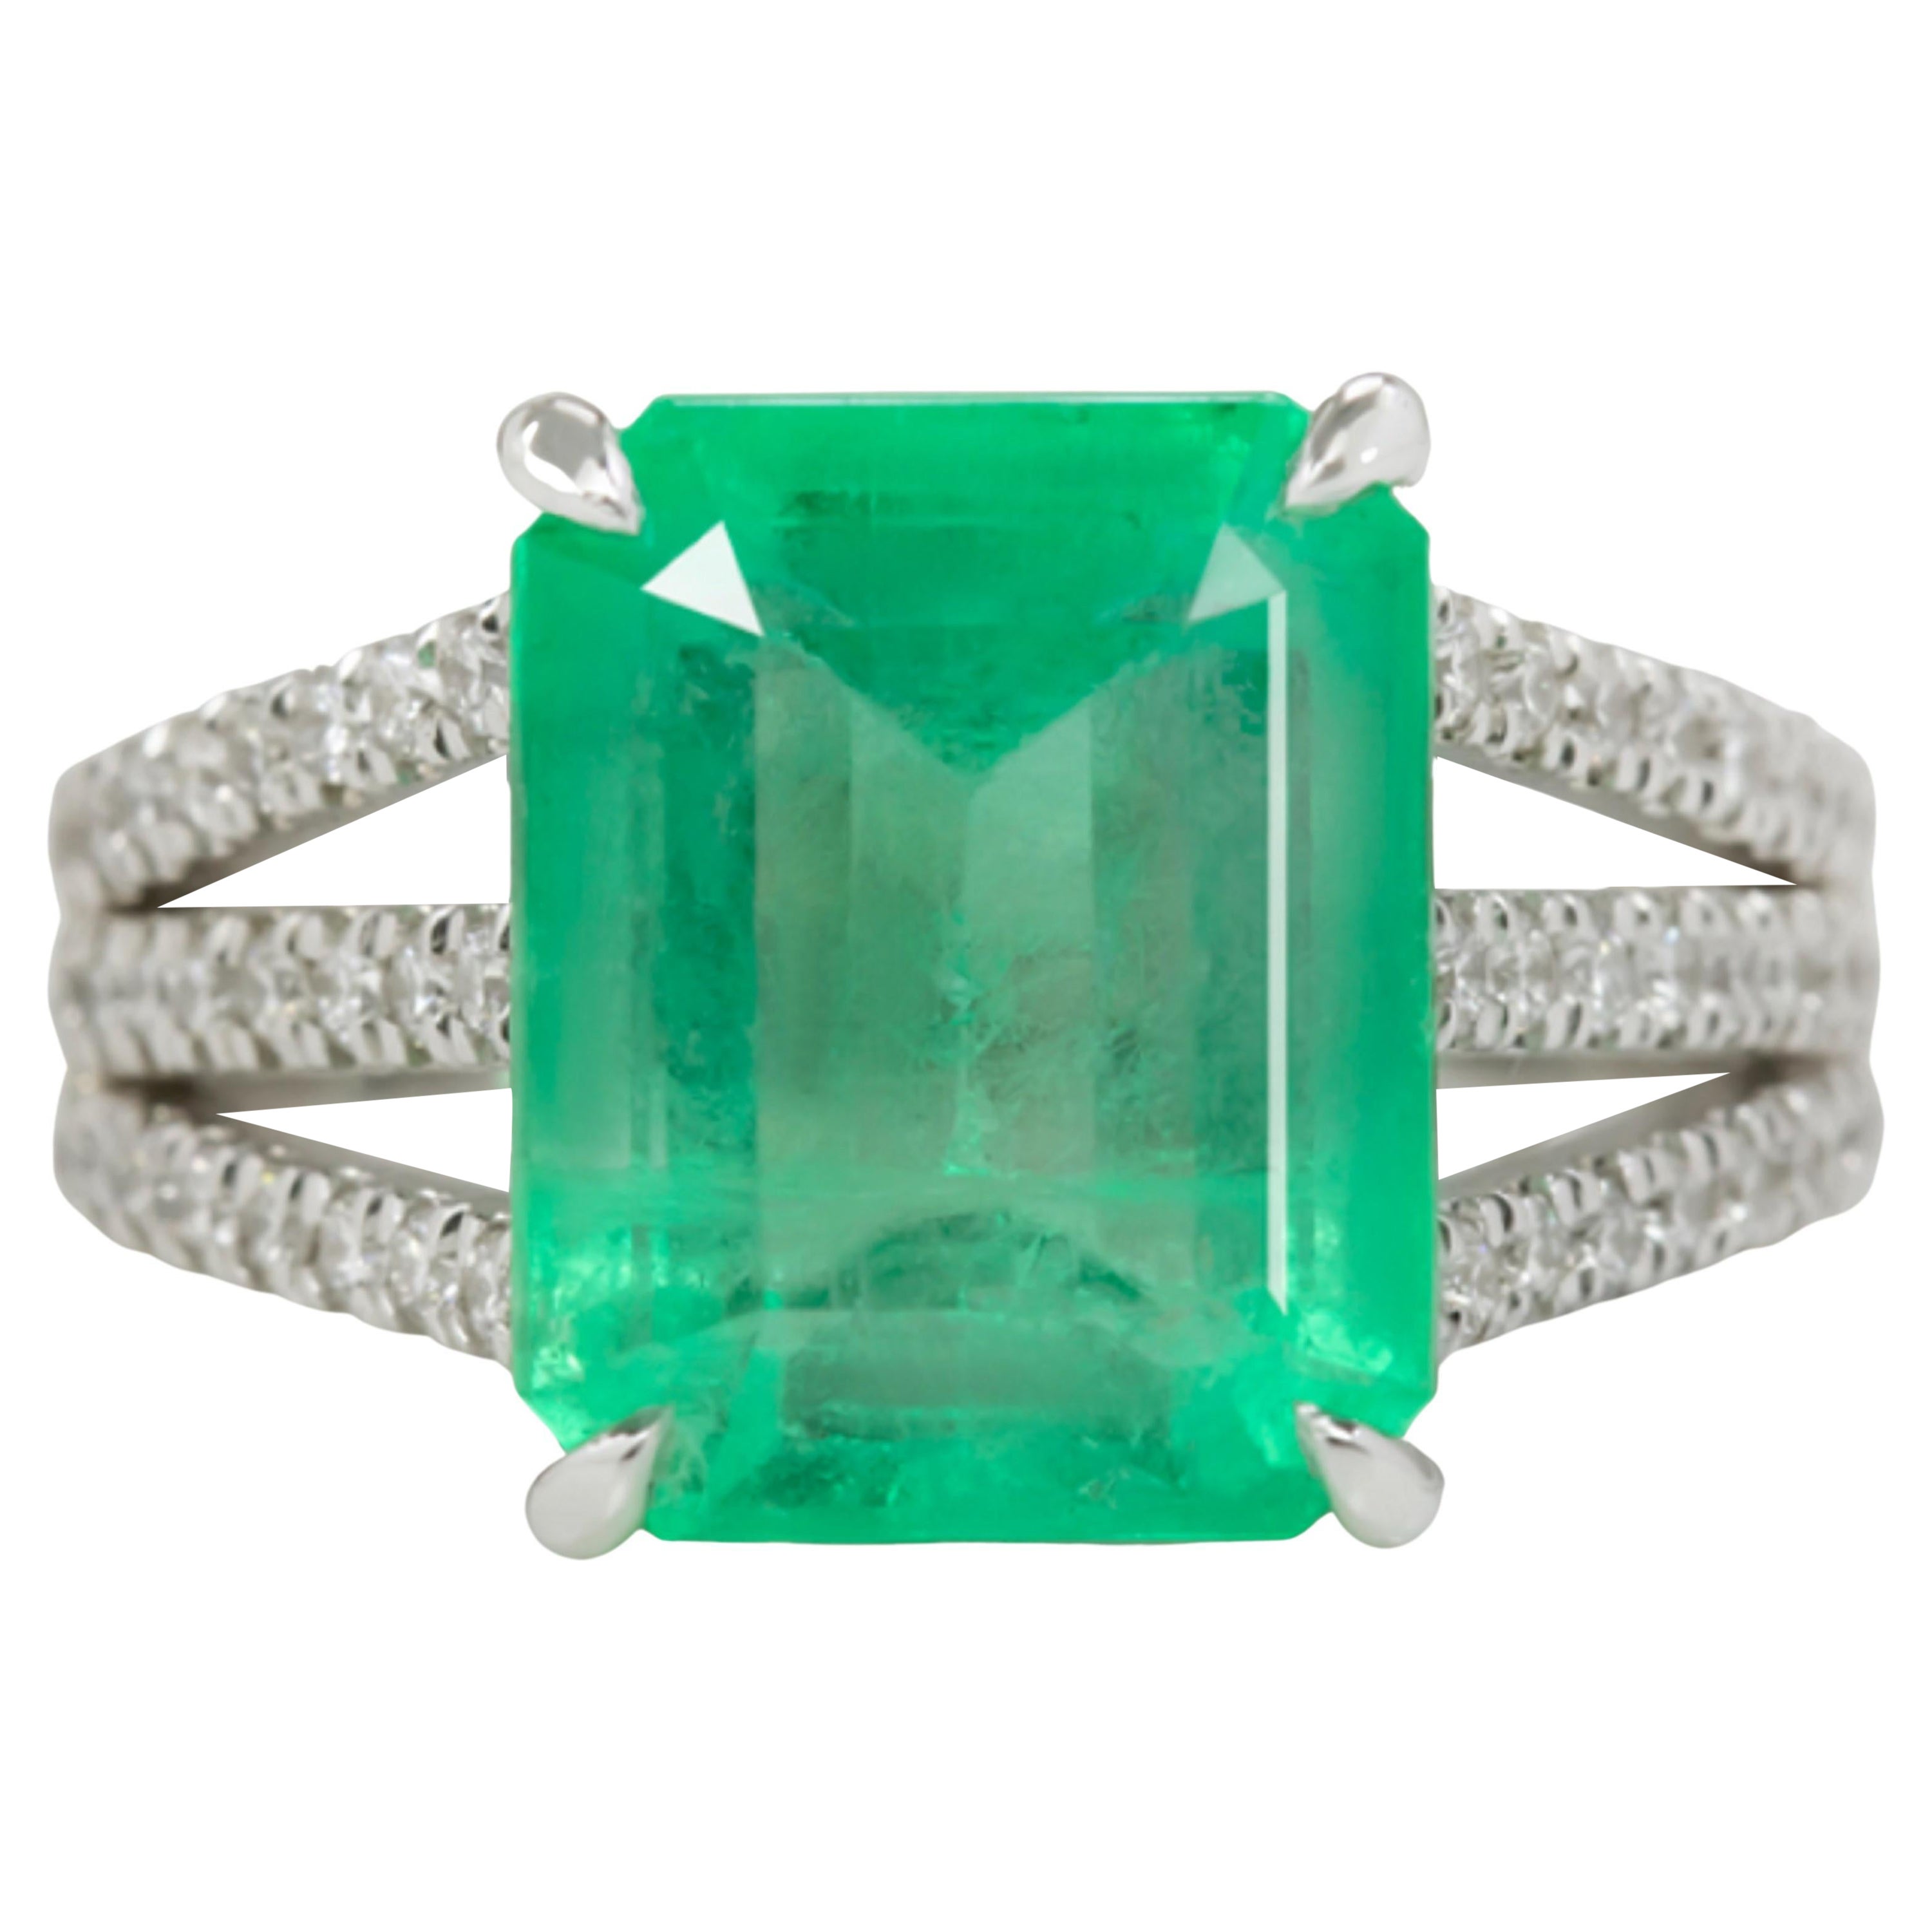 6.80 Carat Natural Green Emerald Diamond Solitaire Ring